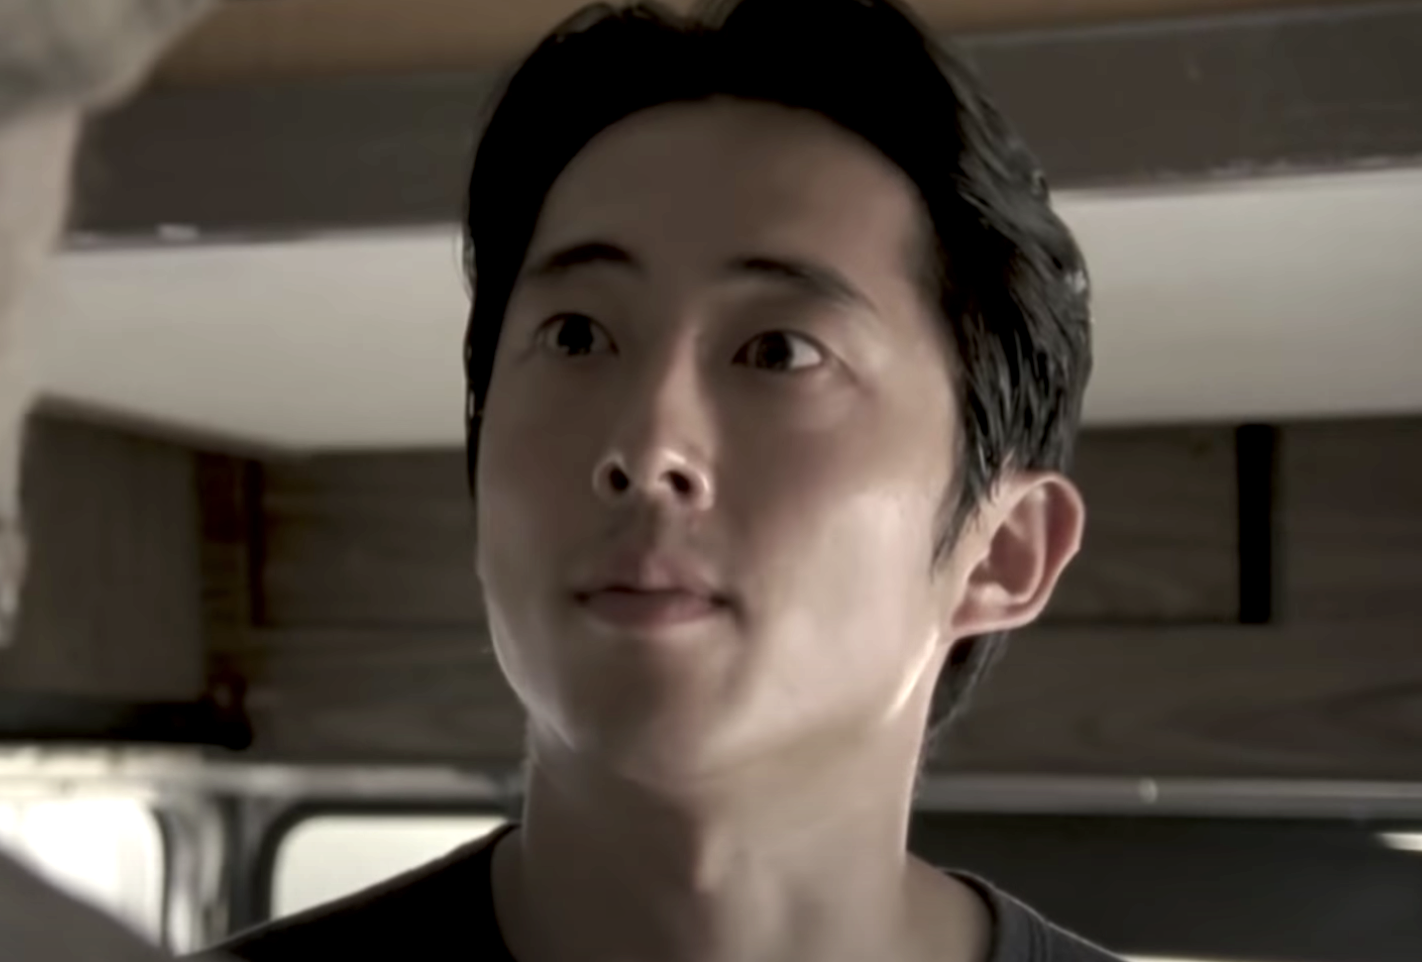 Glenn with wide eyes